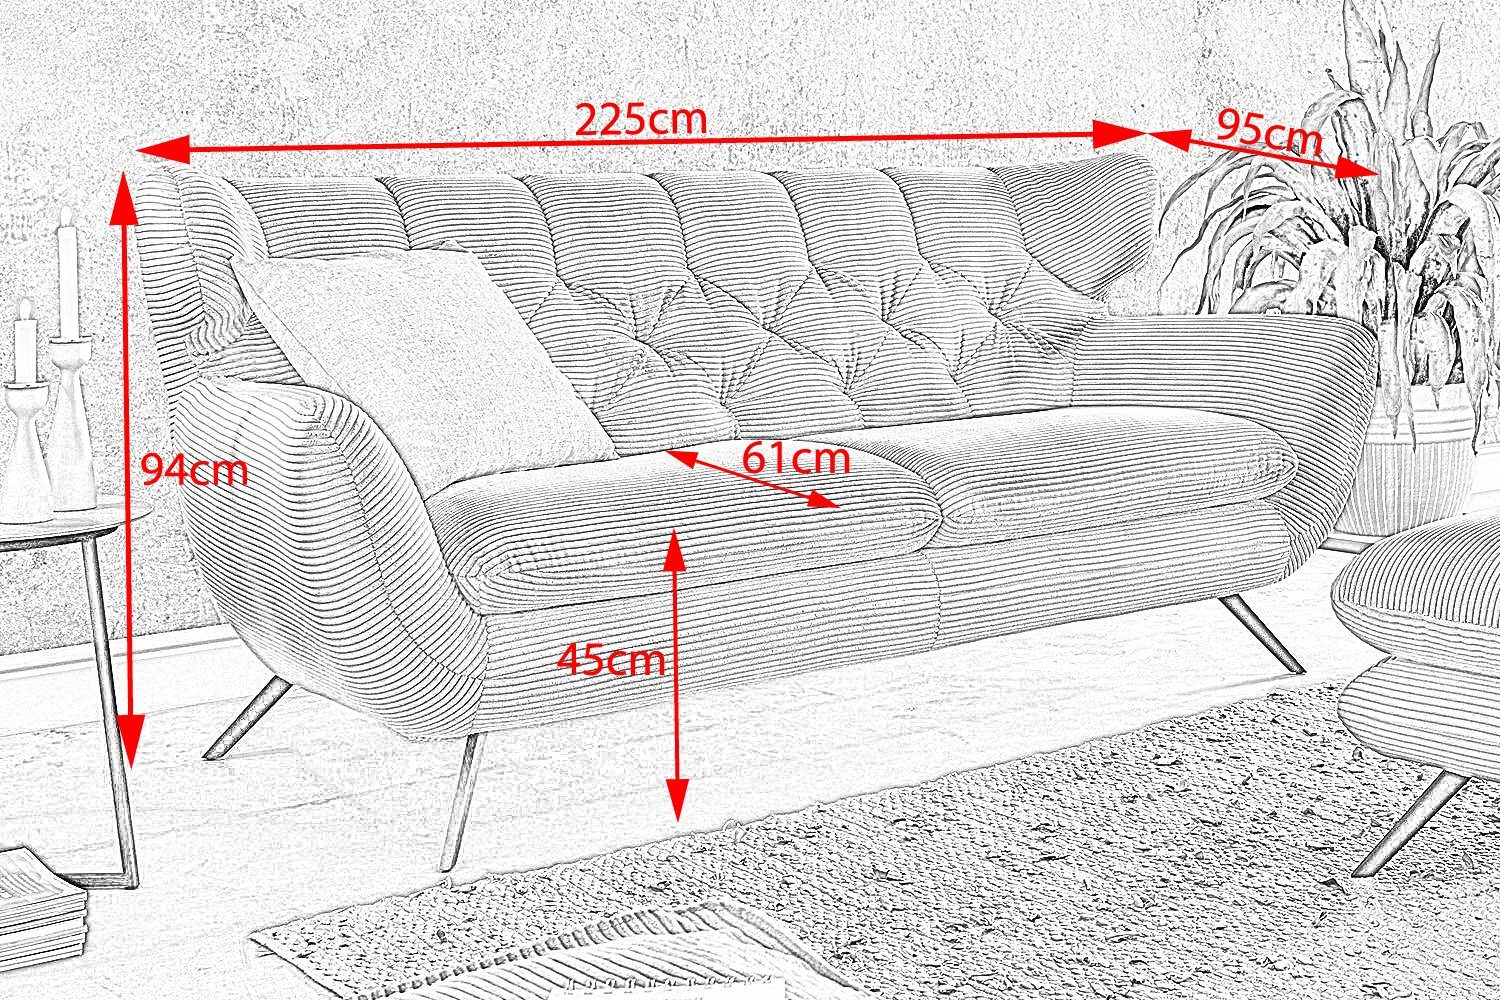 Farben KAWOLA Cord Sofa od. 3-Sitzer CHARME, versch. Velvet